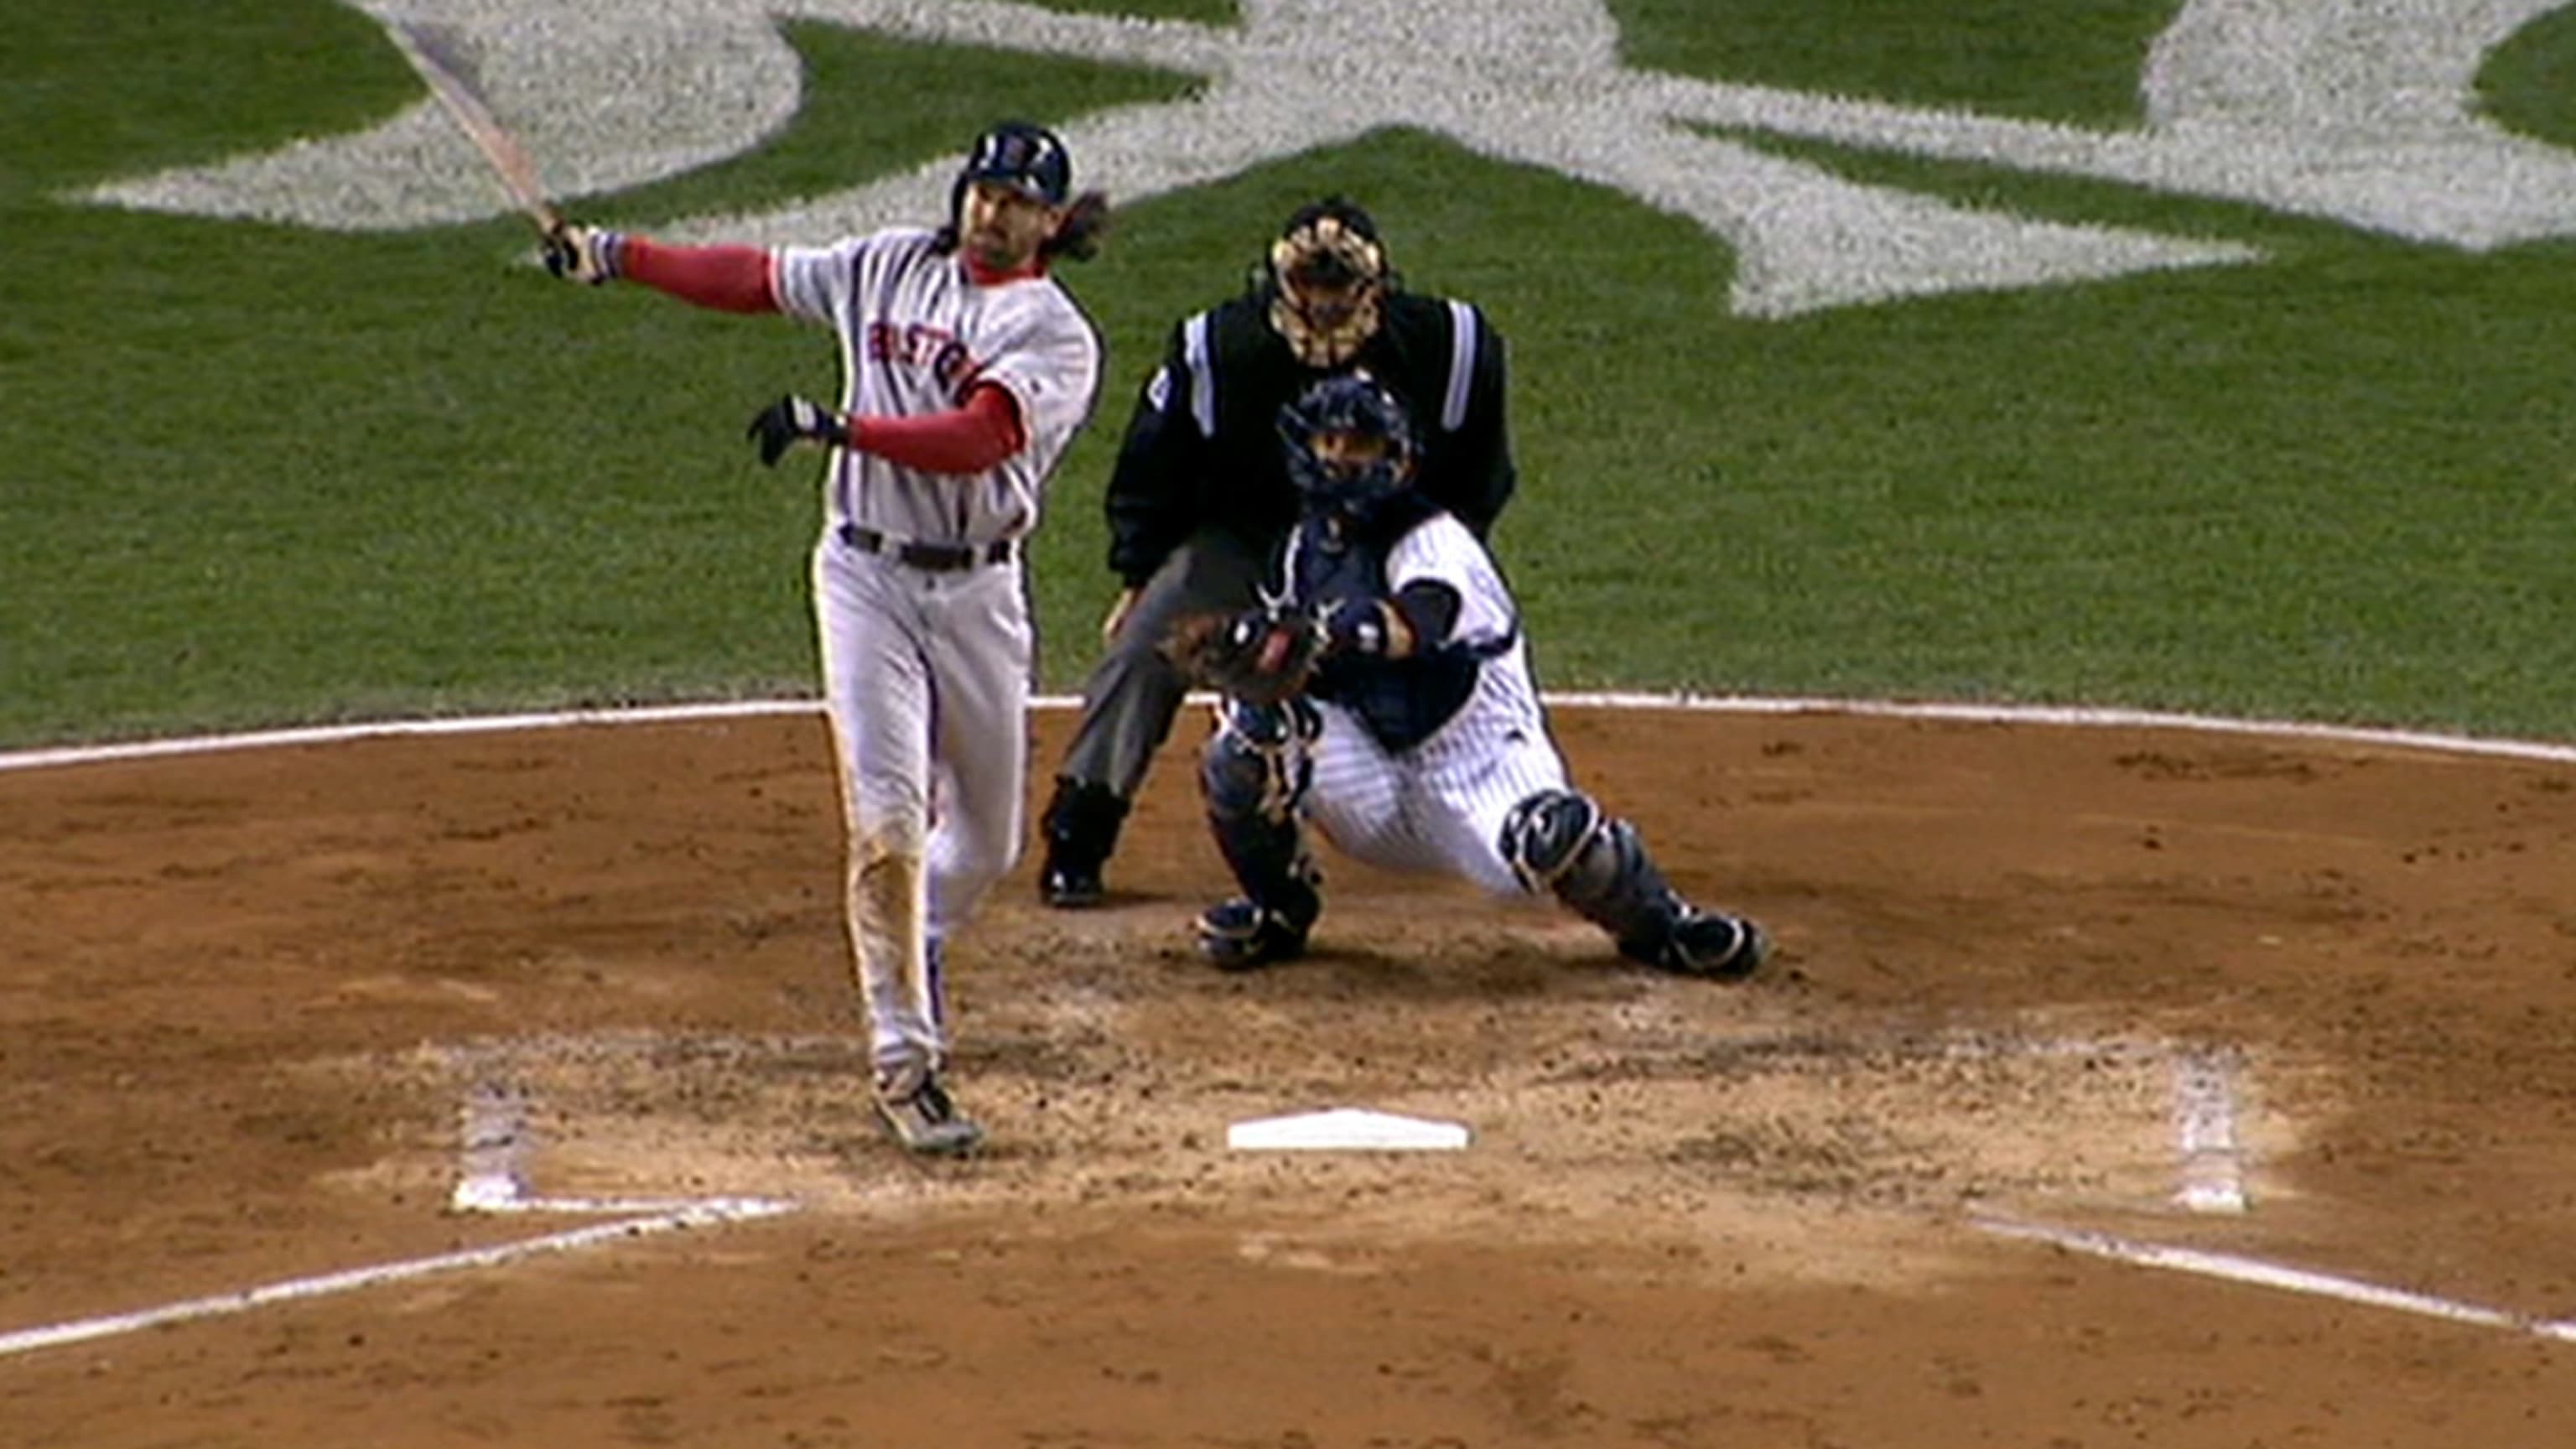 Baseball In Pics on X: Johnny Damon hits a grand slam in game 7